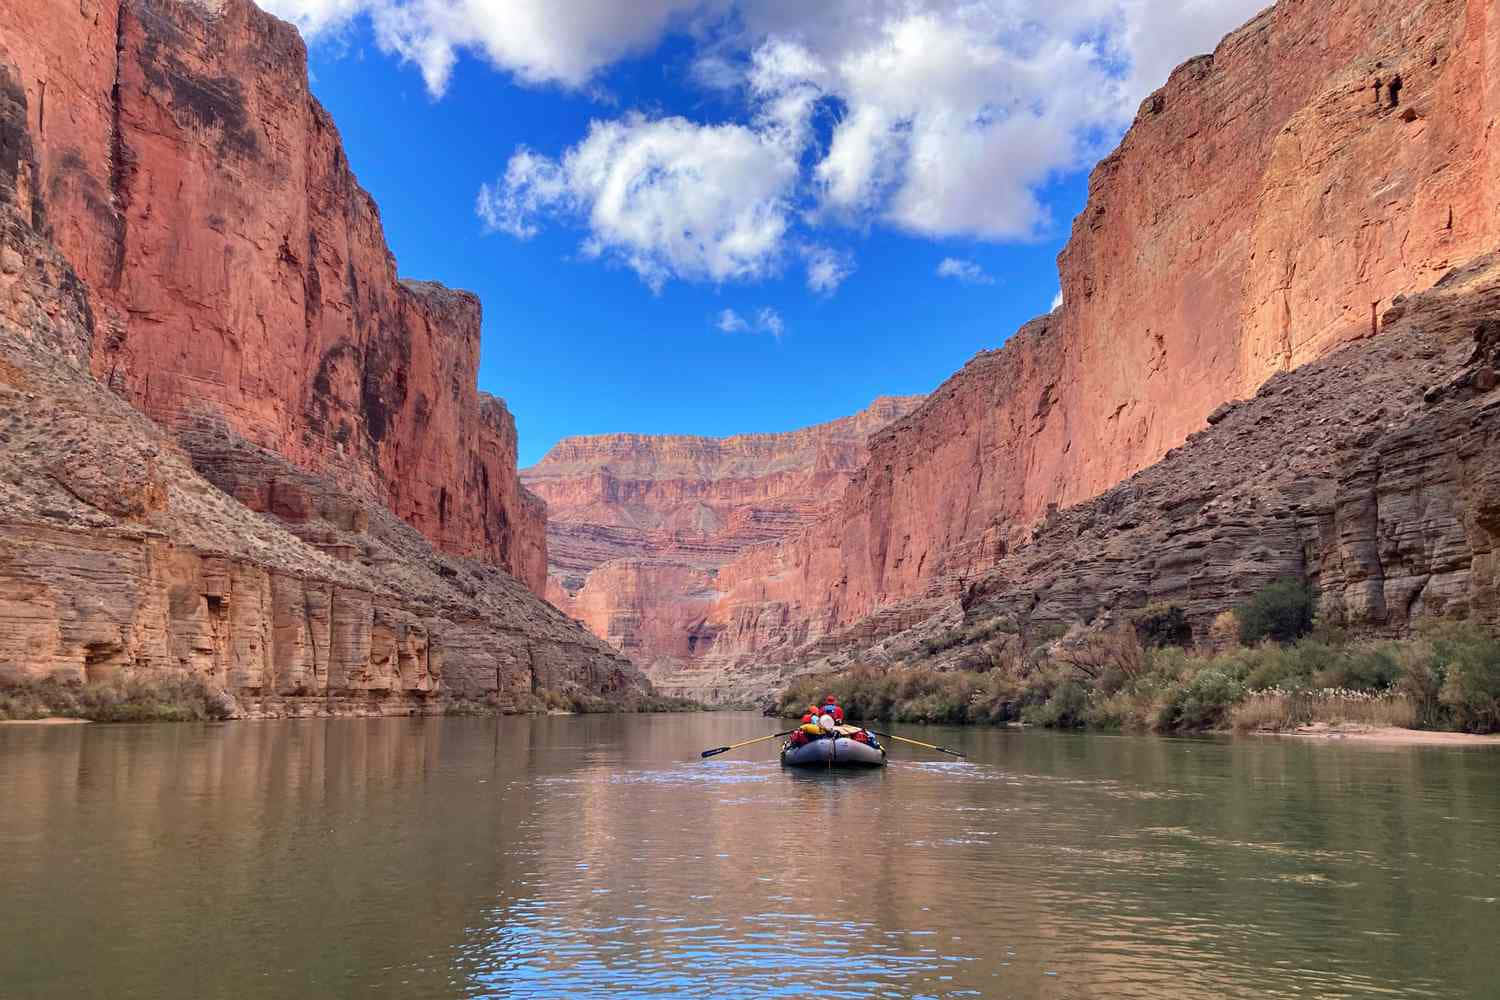 The Grand Canyon's South Rim, a breathtaking scene